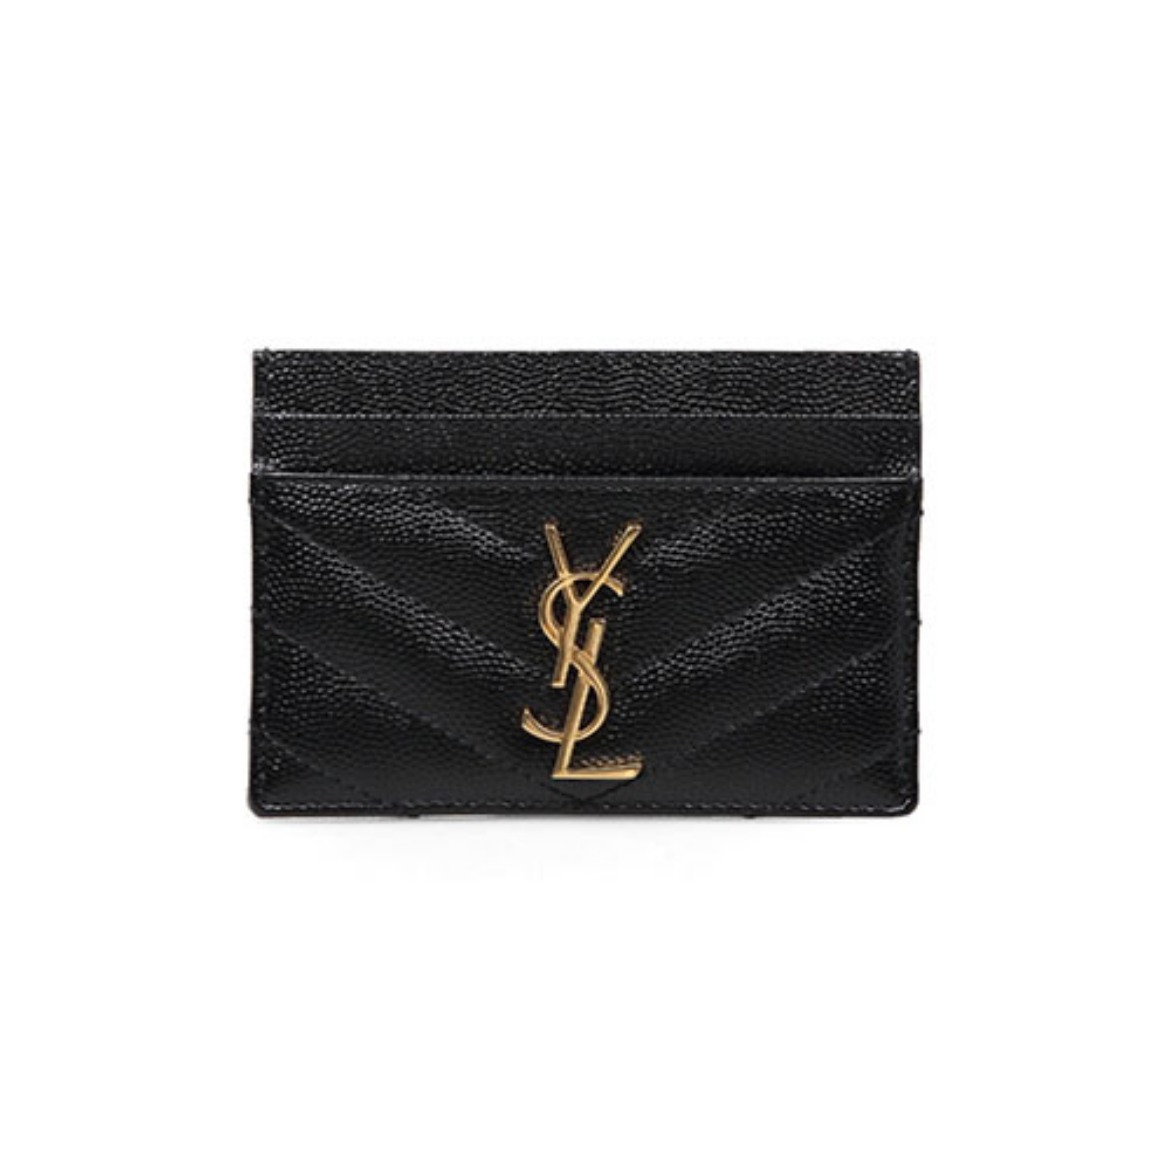 20S/S 세인트로랑 모노그램 캐비어 블랙 카드지갑